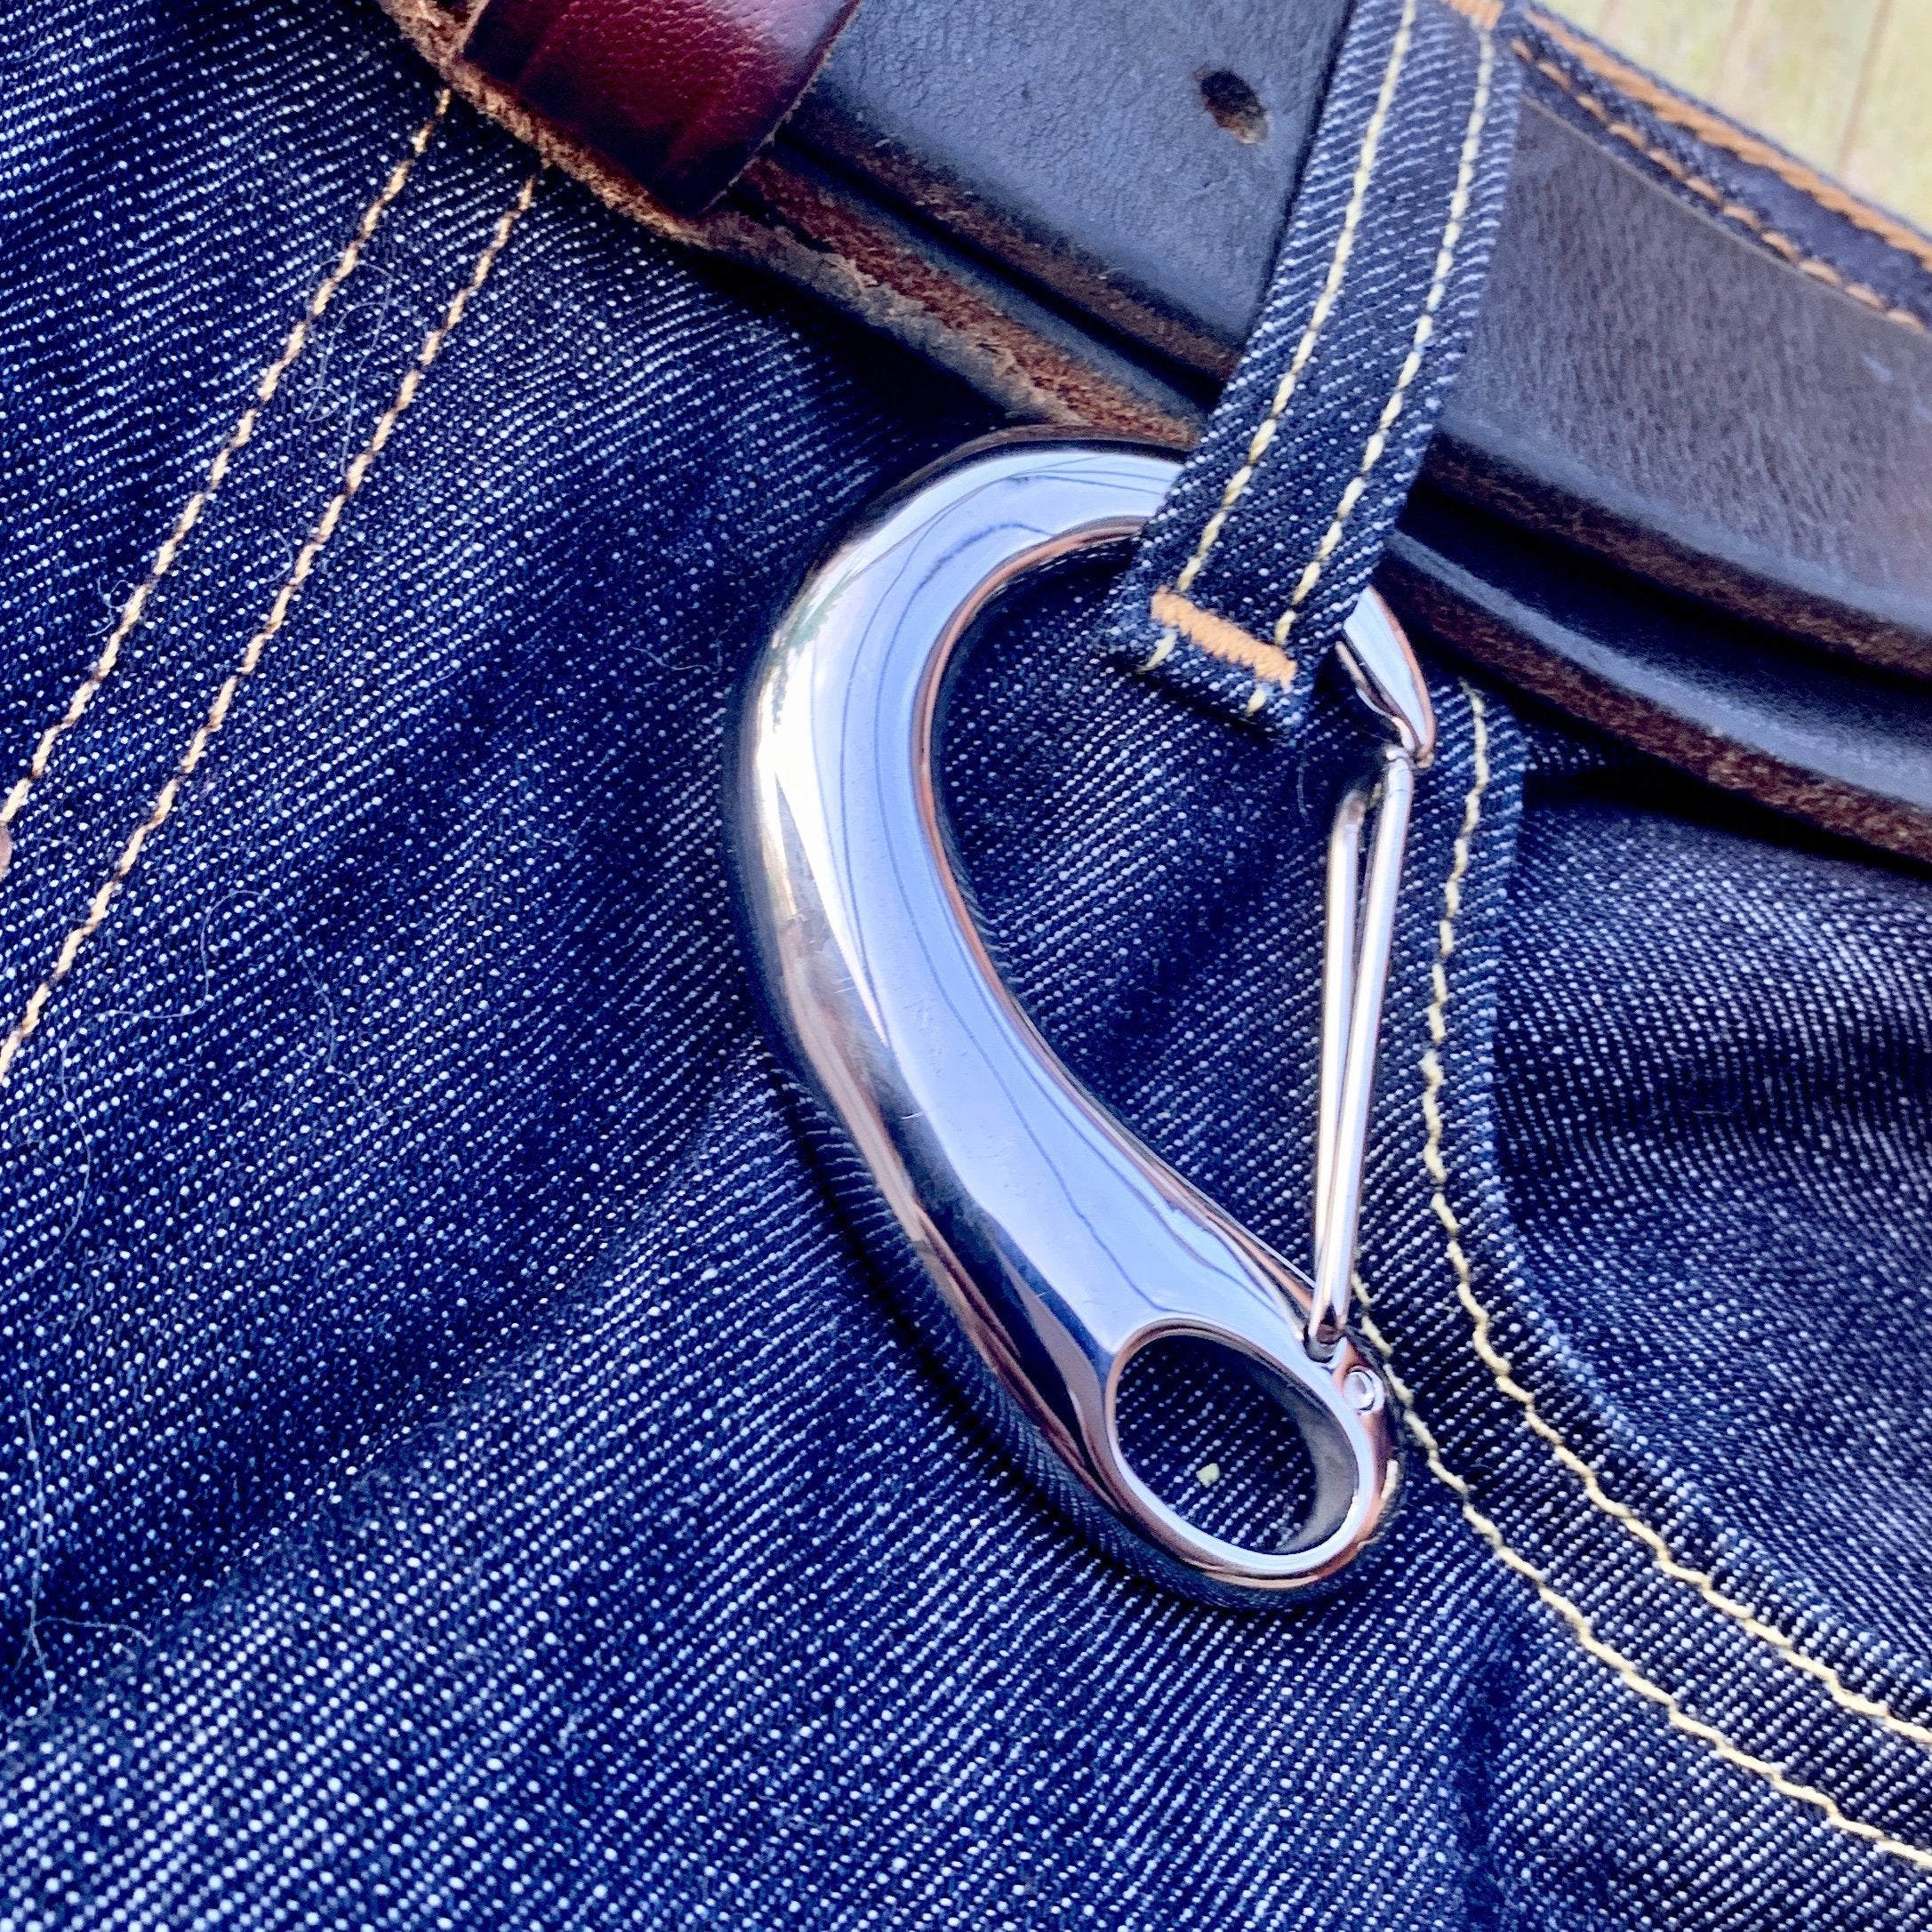 Leather Belt Loop Key Fob Blank